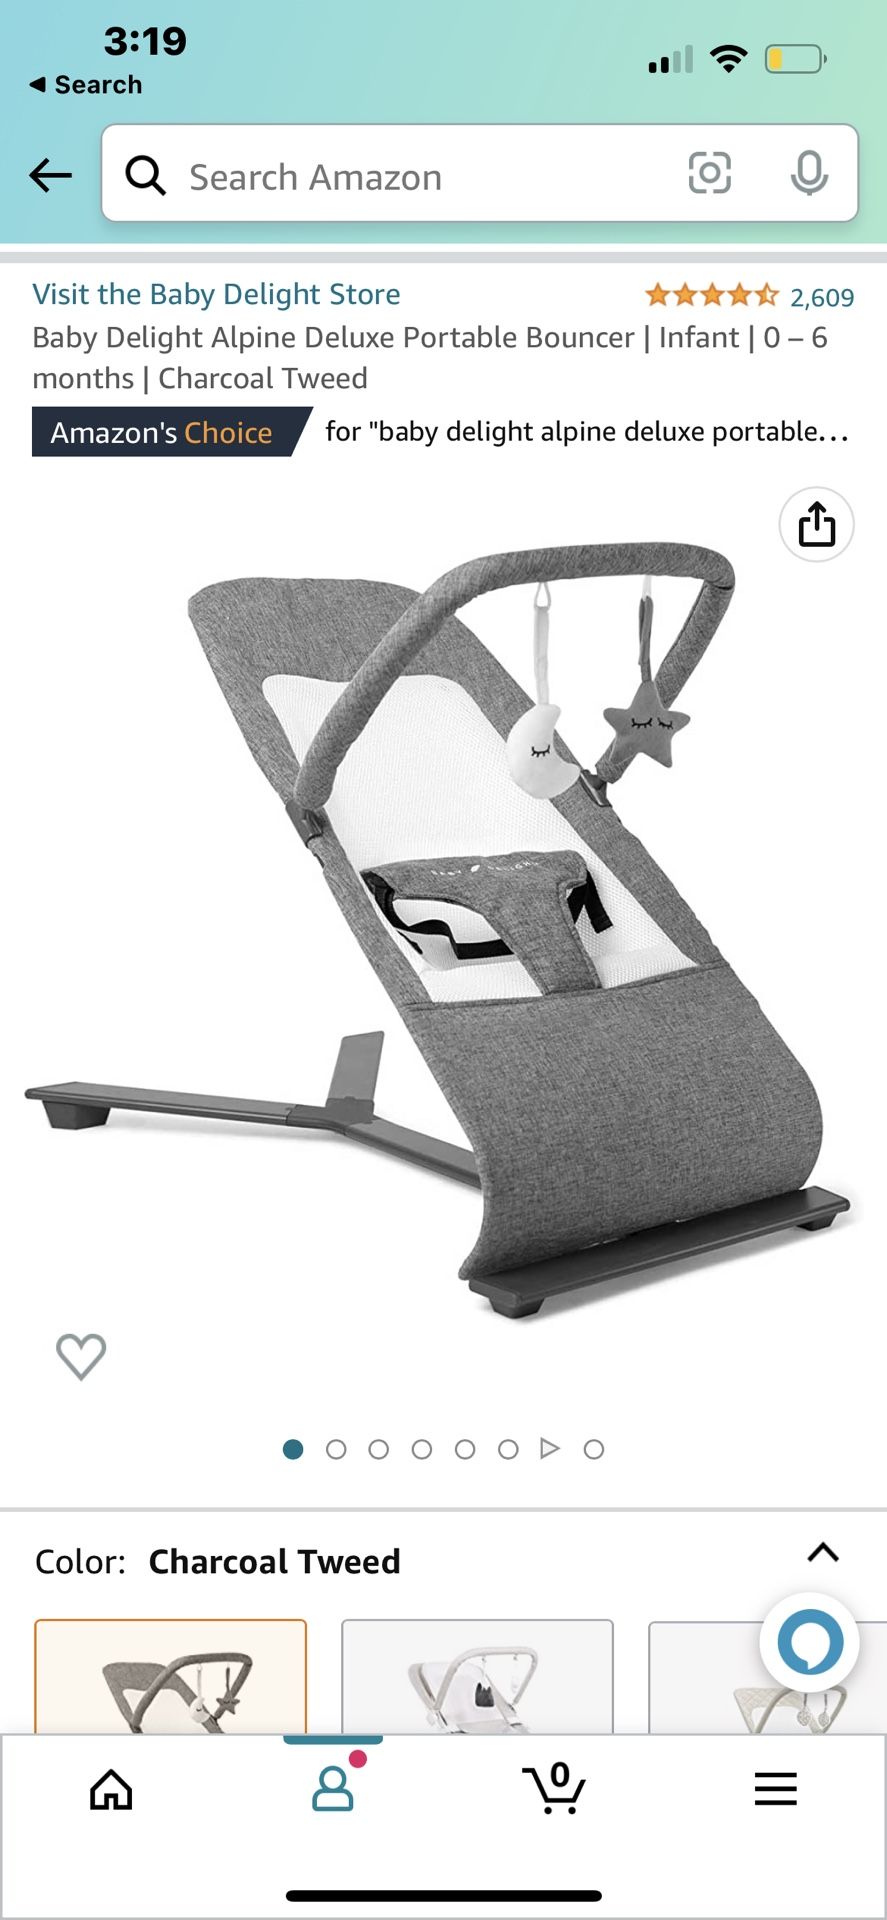 Portable Bouncer For Infants (0-6 Months)